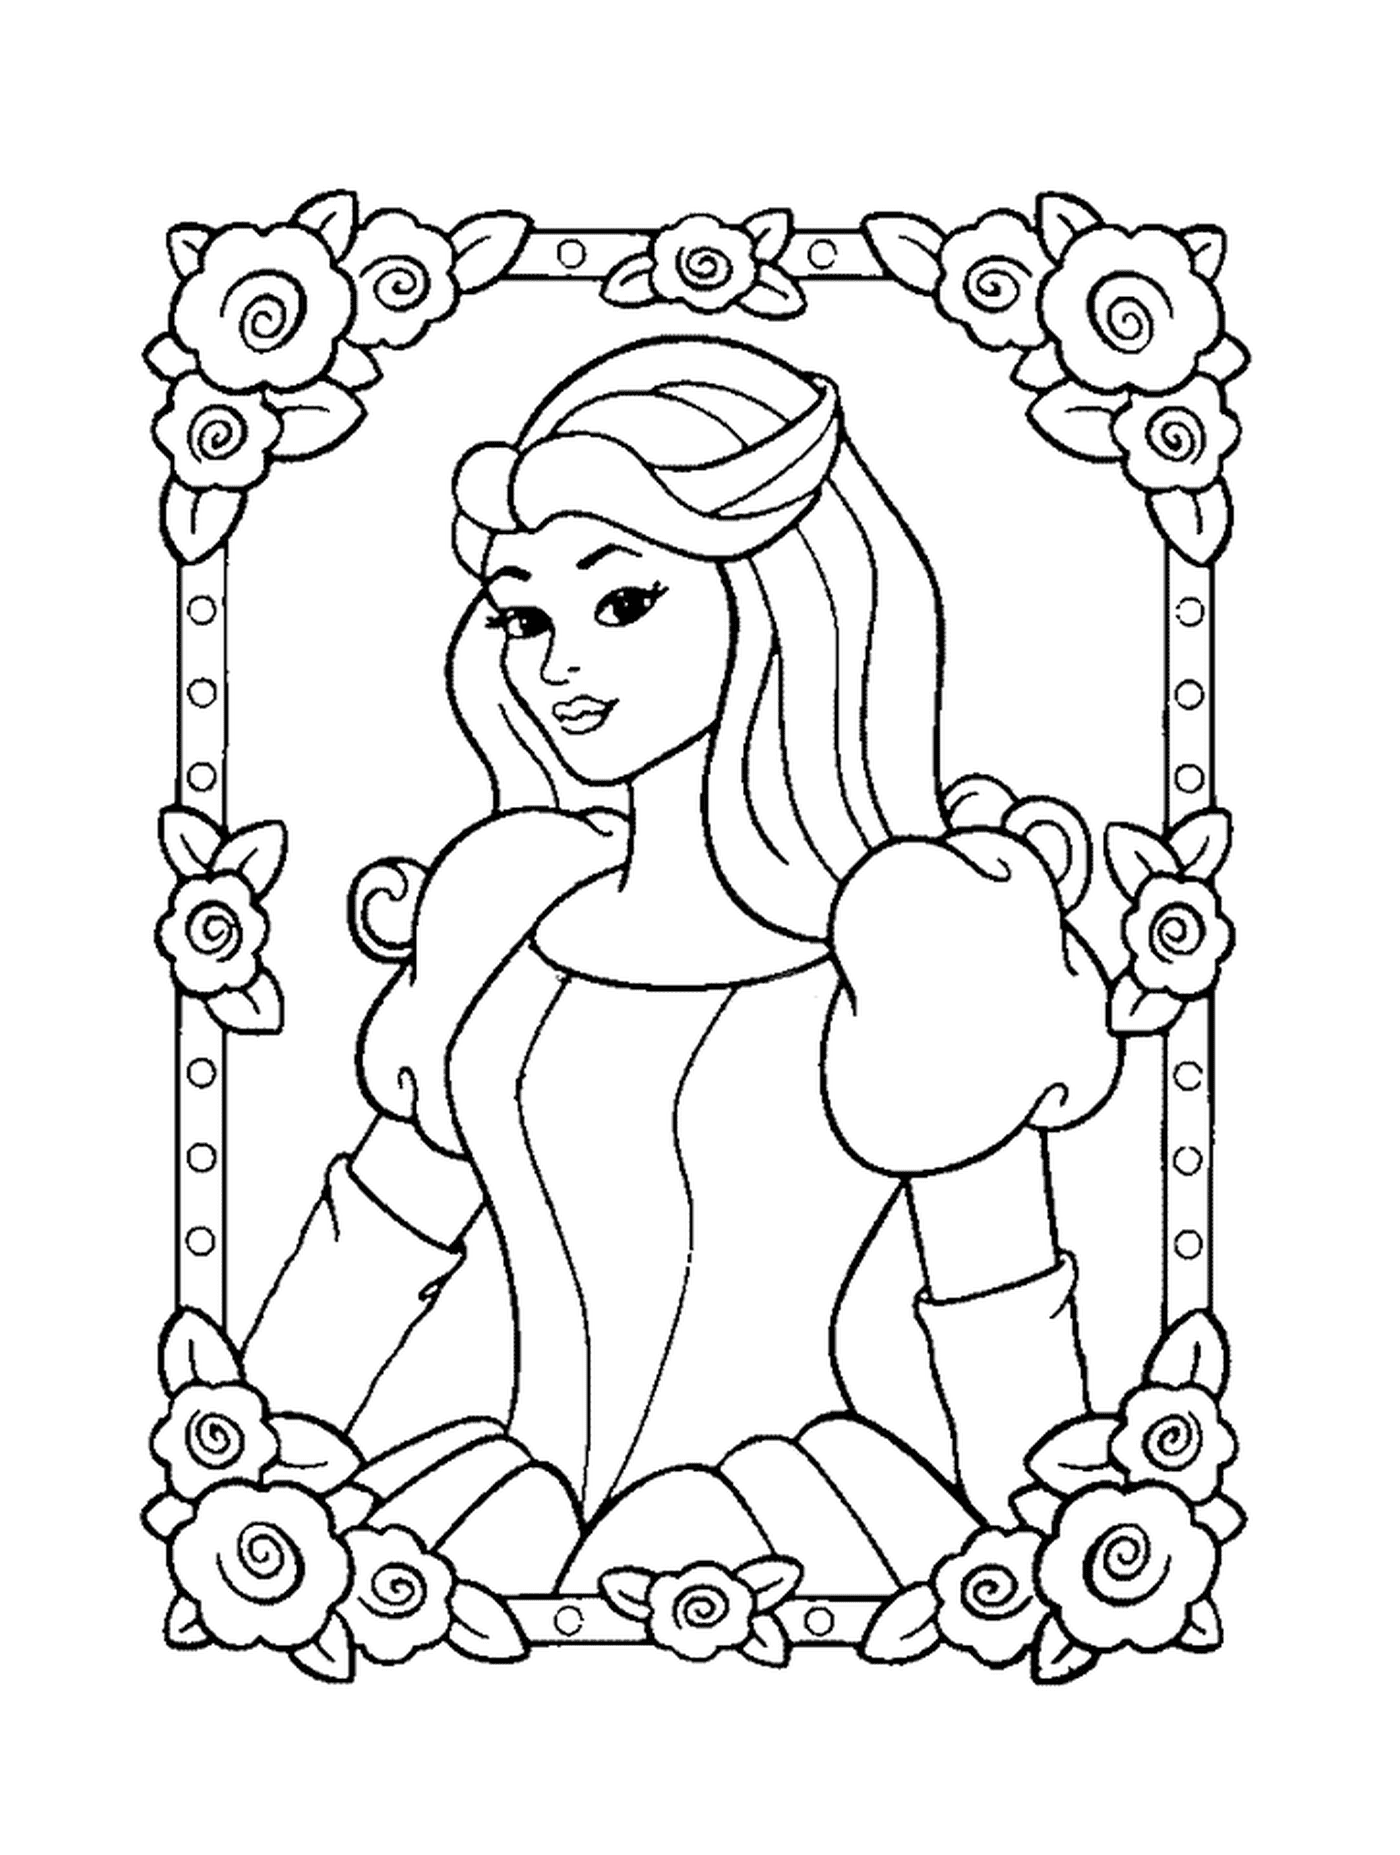  Disney Princess, a woman with a flower frame around her 